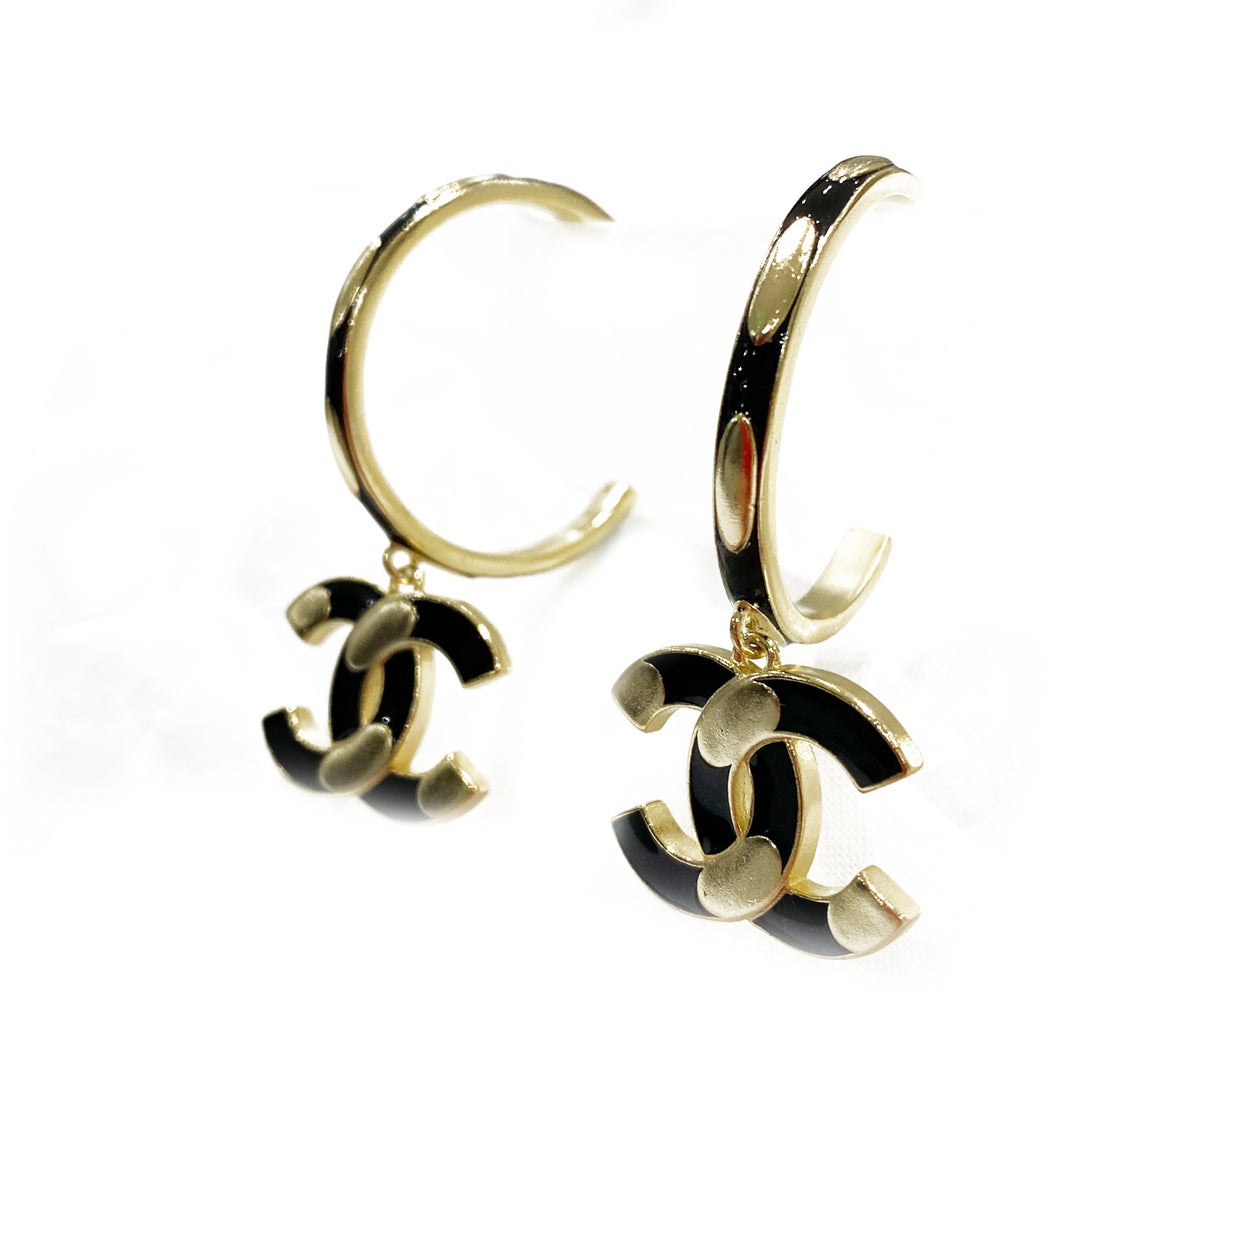 Authentic Chanel Earrings -  UK